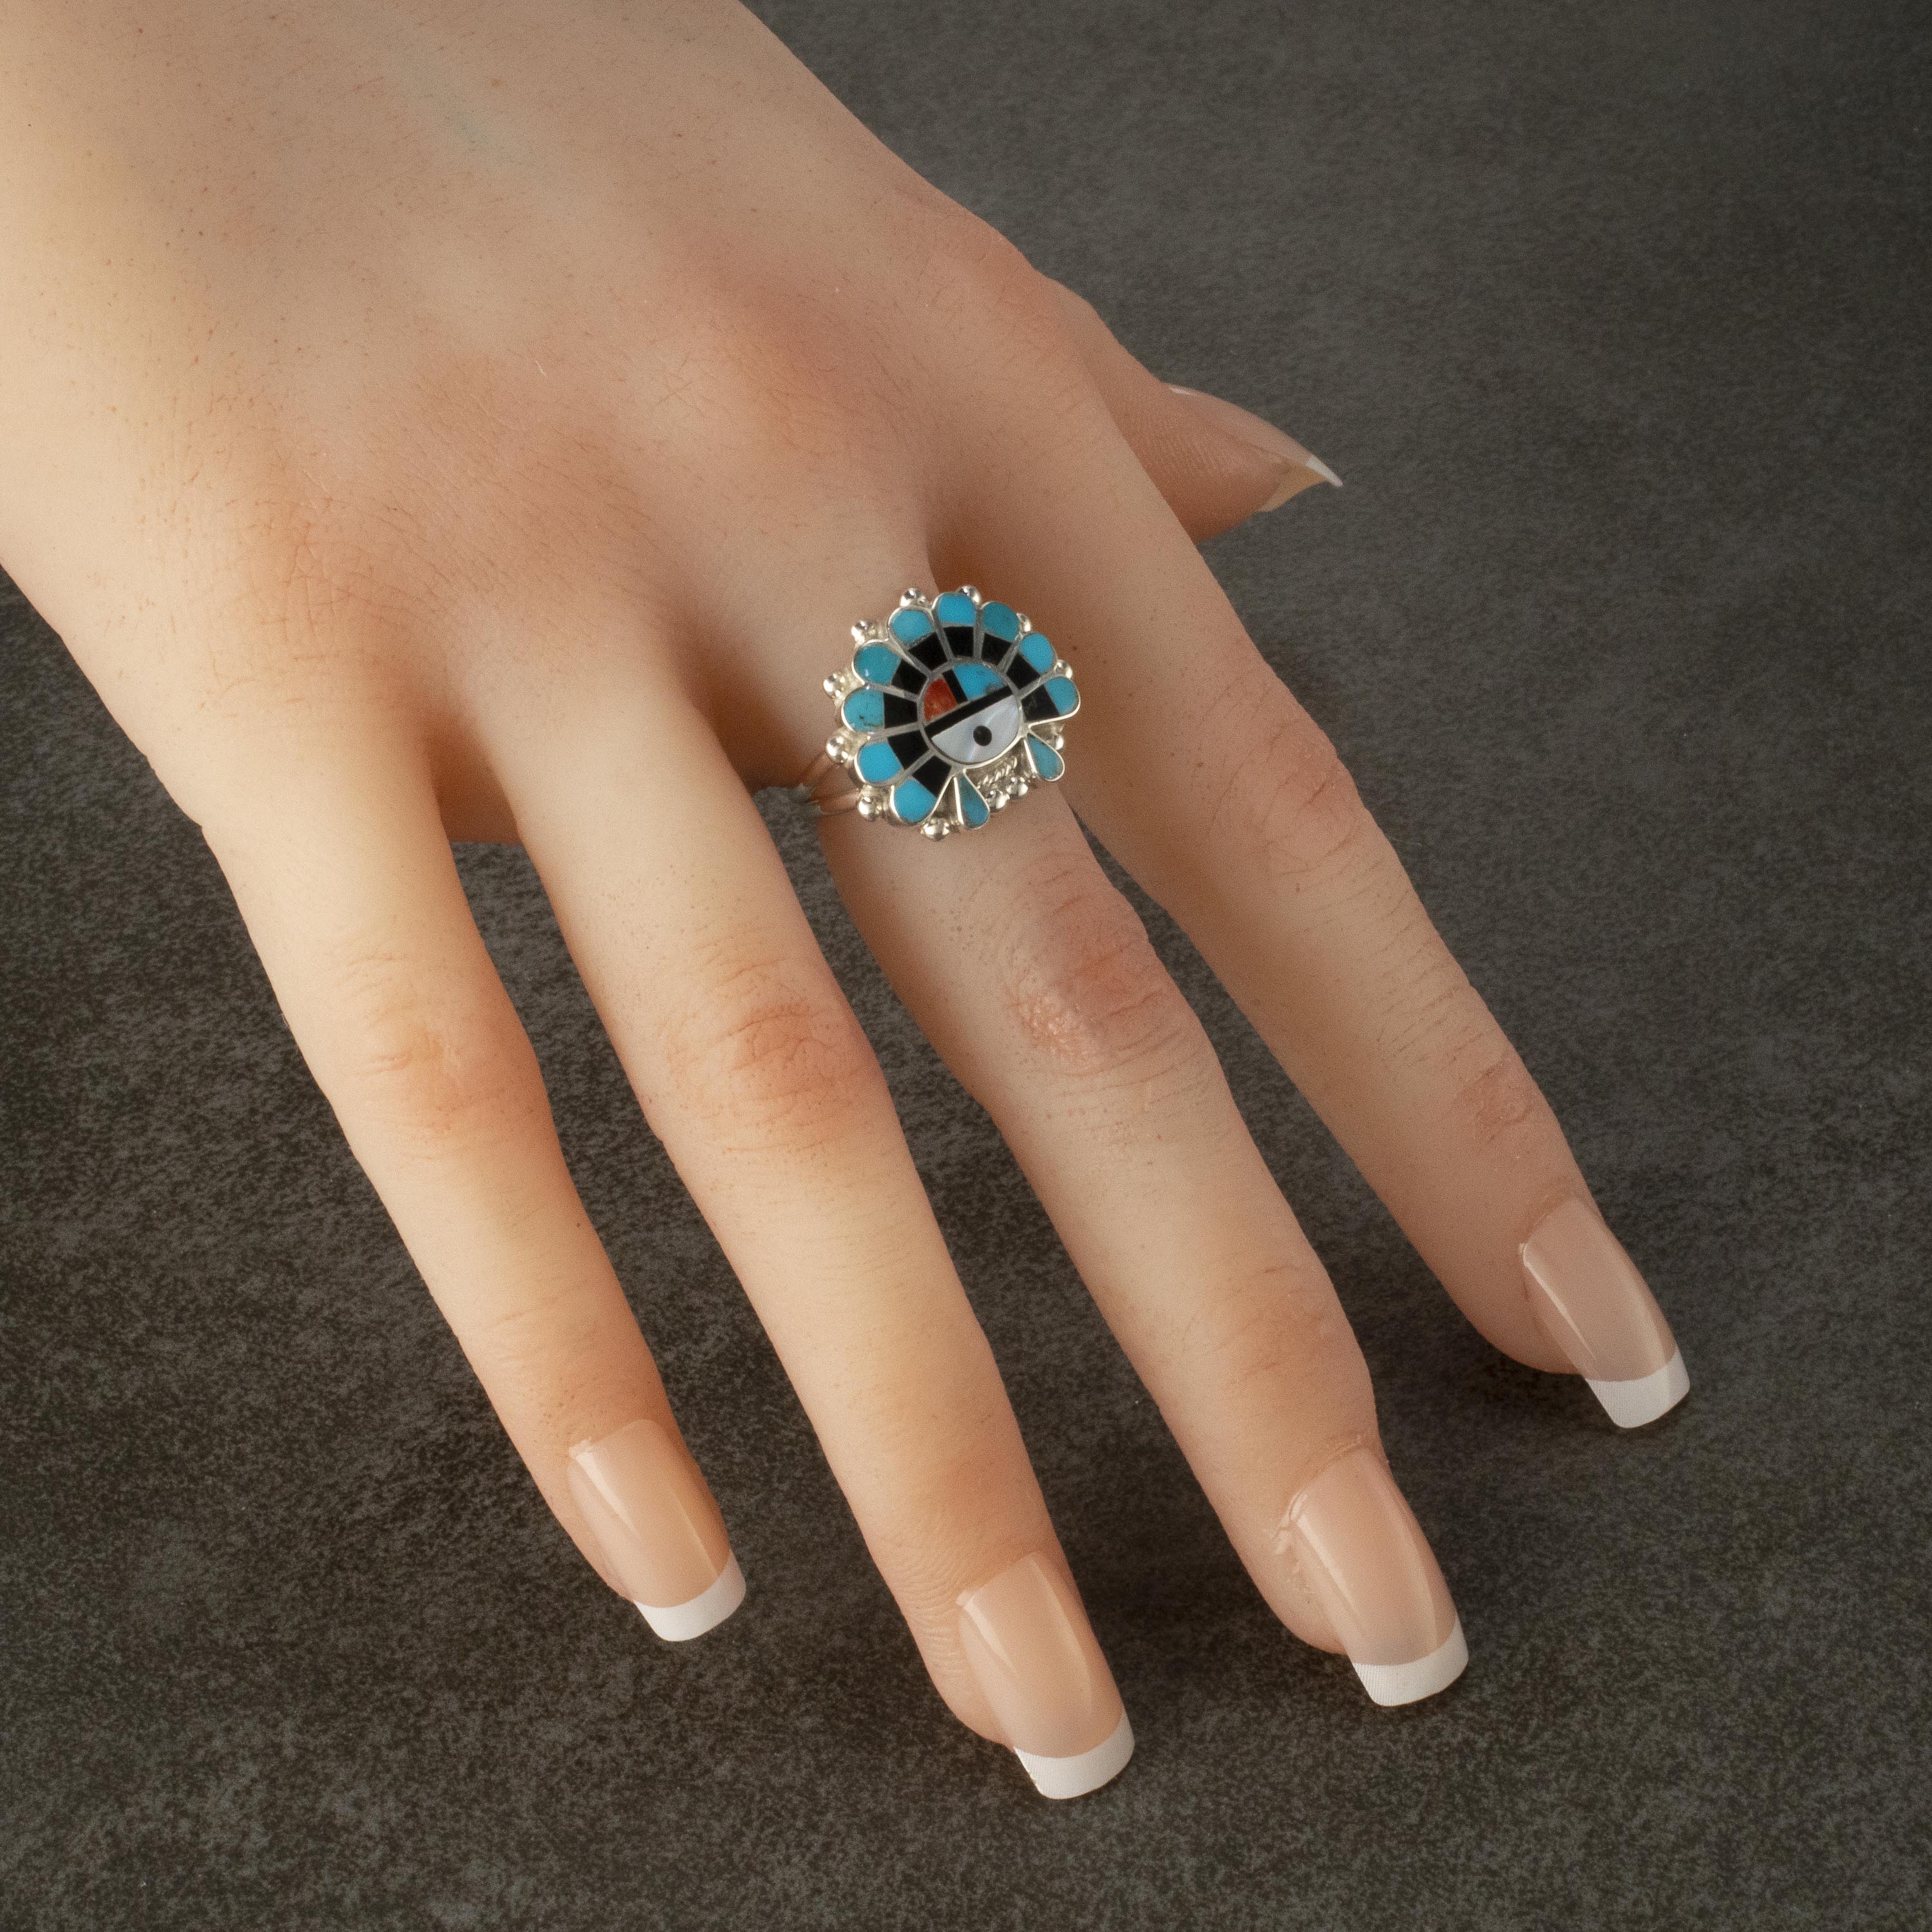 Coral nails with pearl nail gems